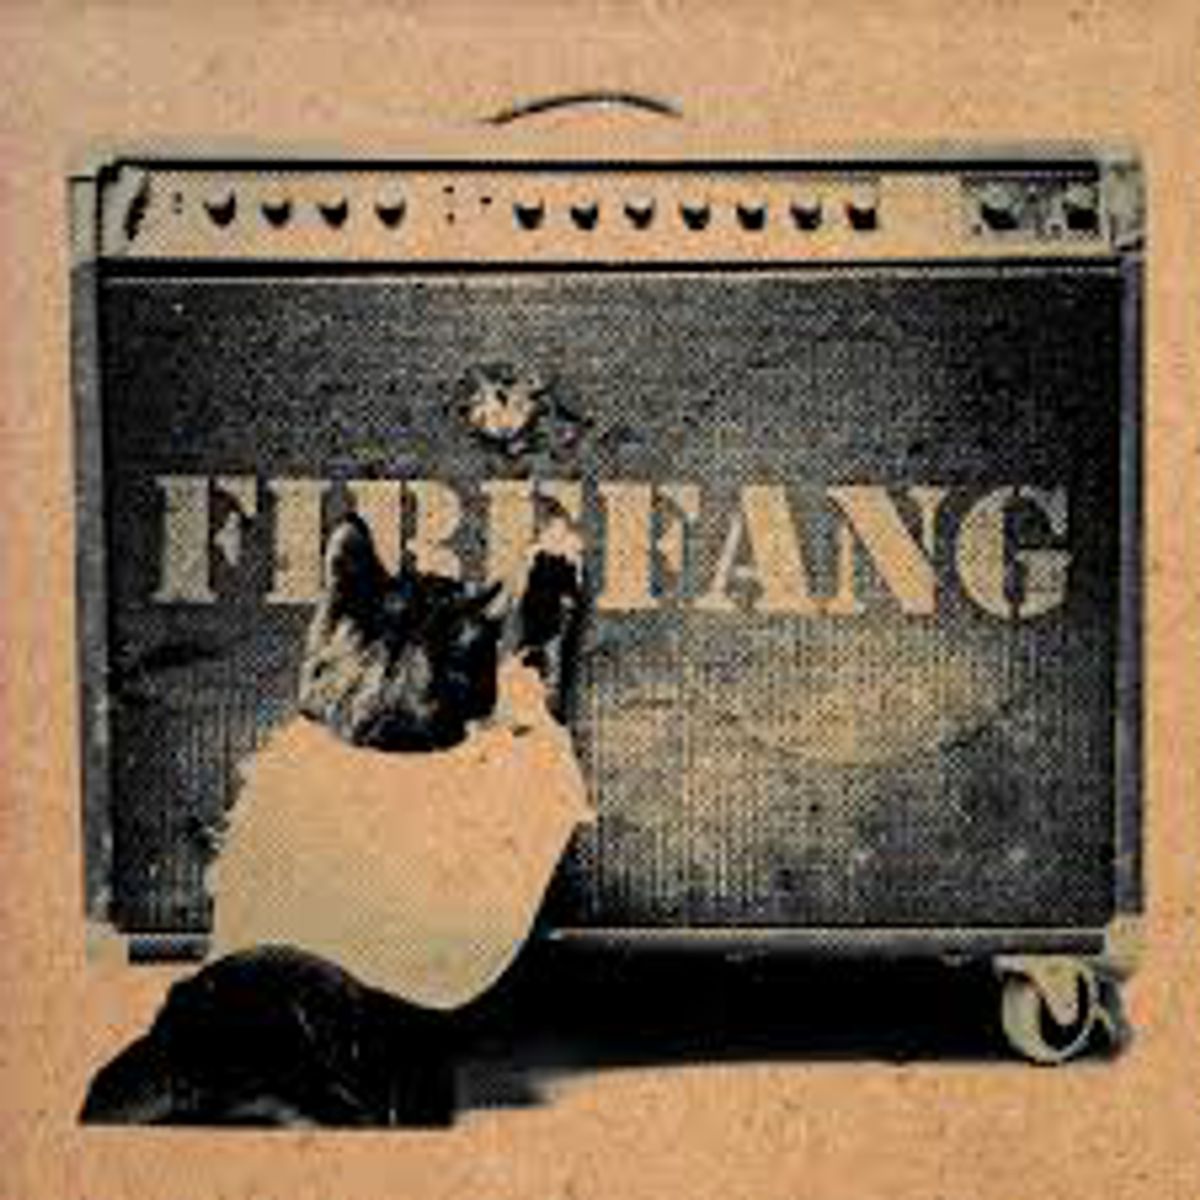 Firefang – 'Firefang'